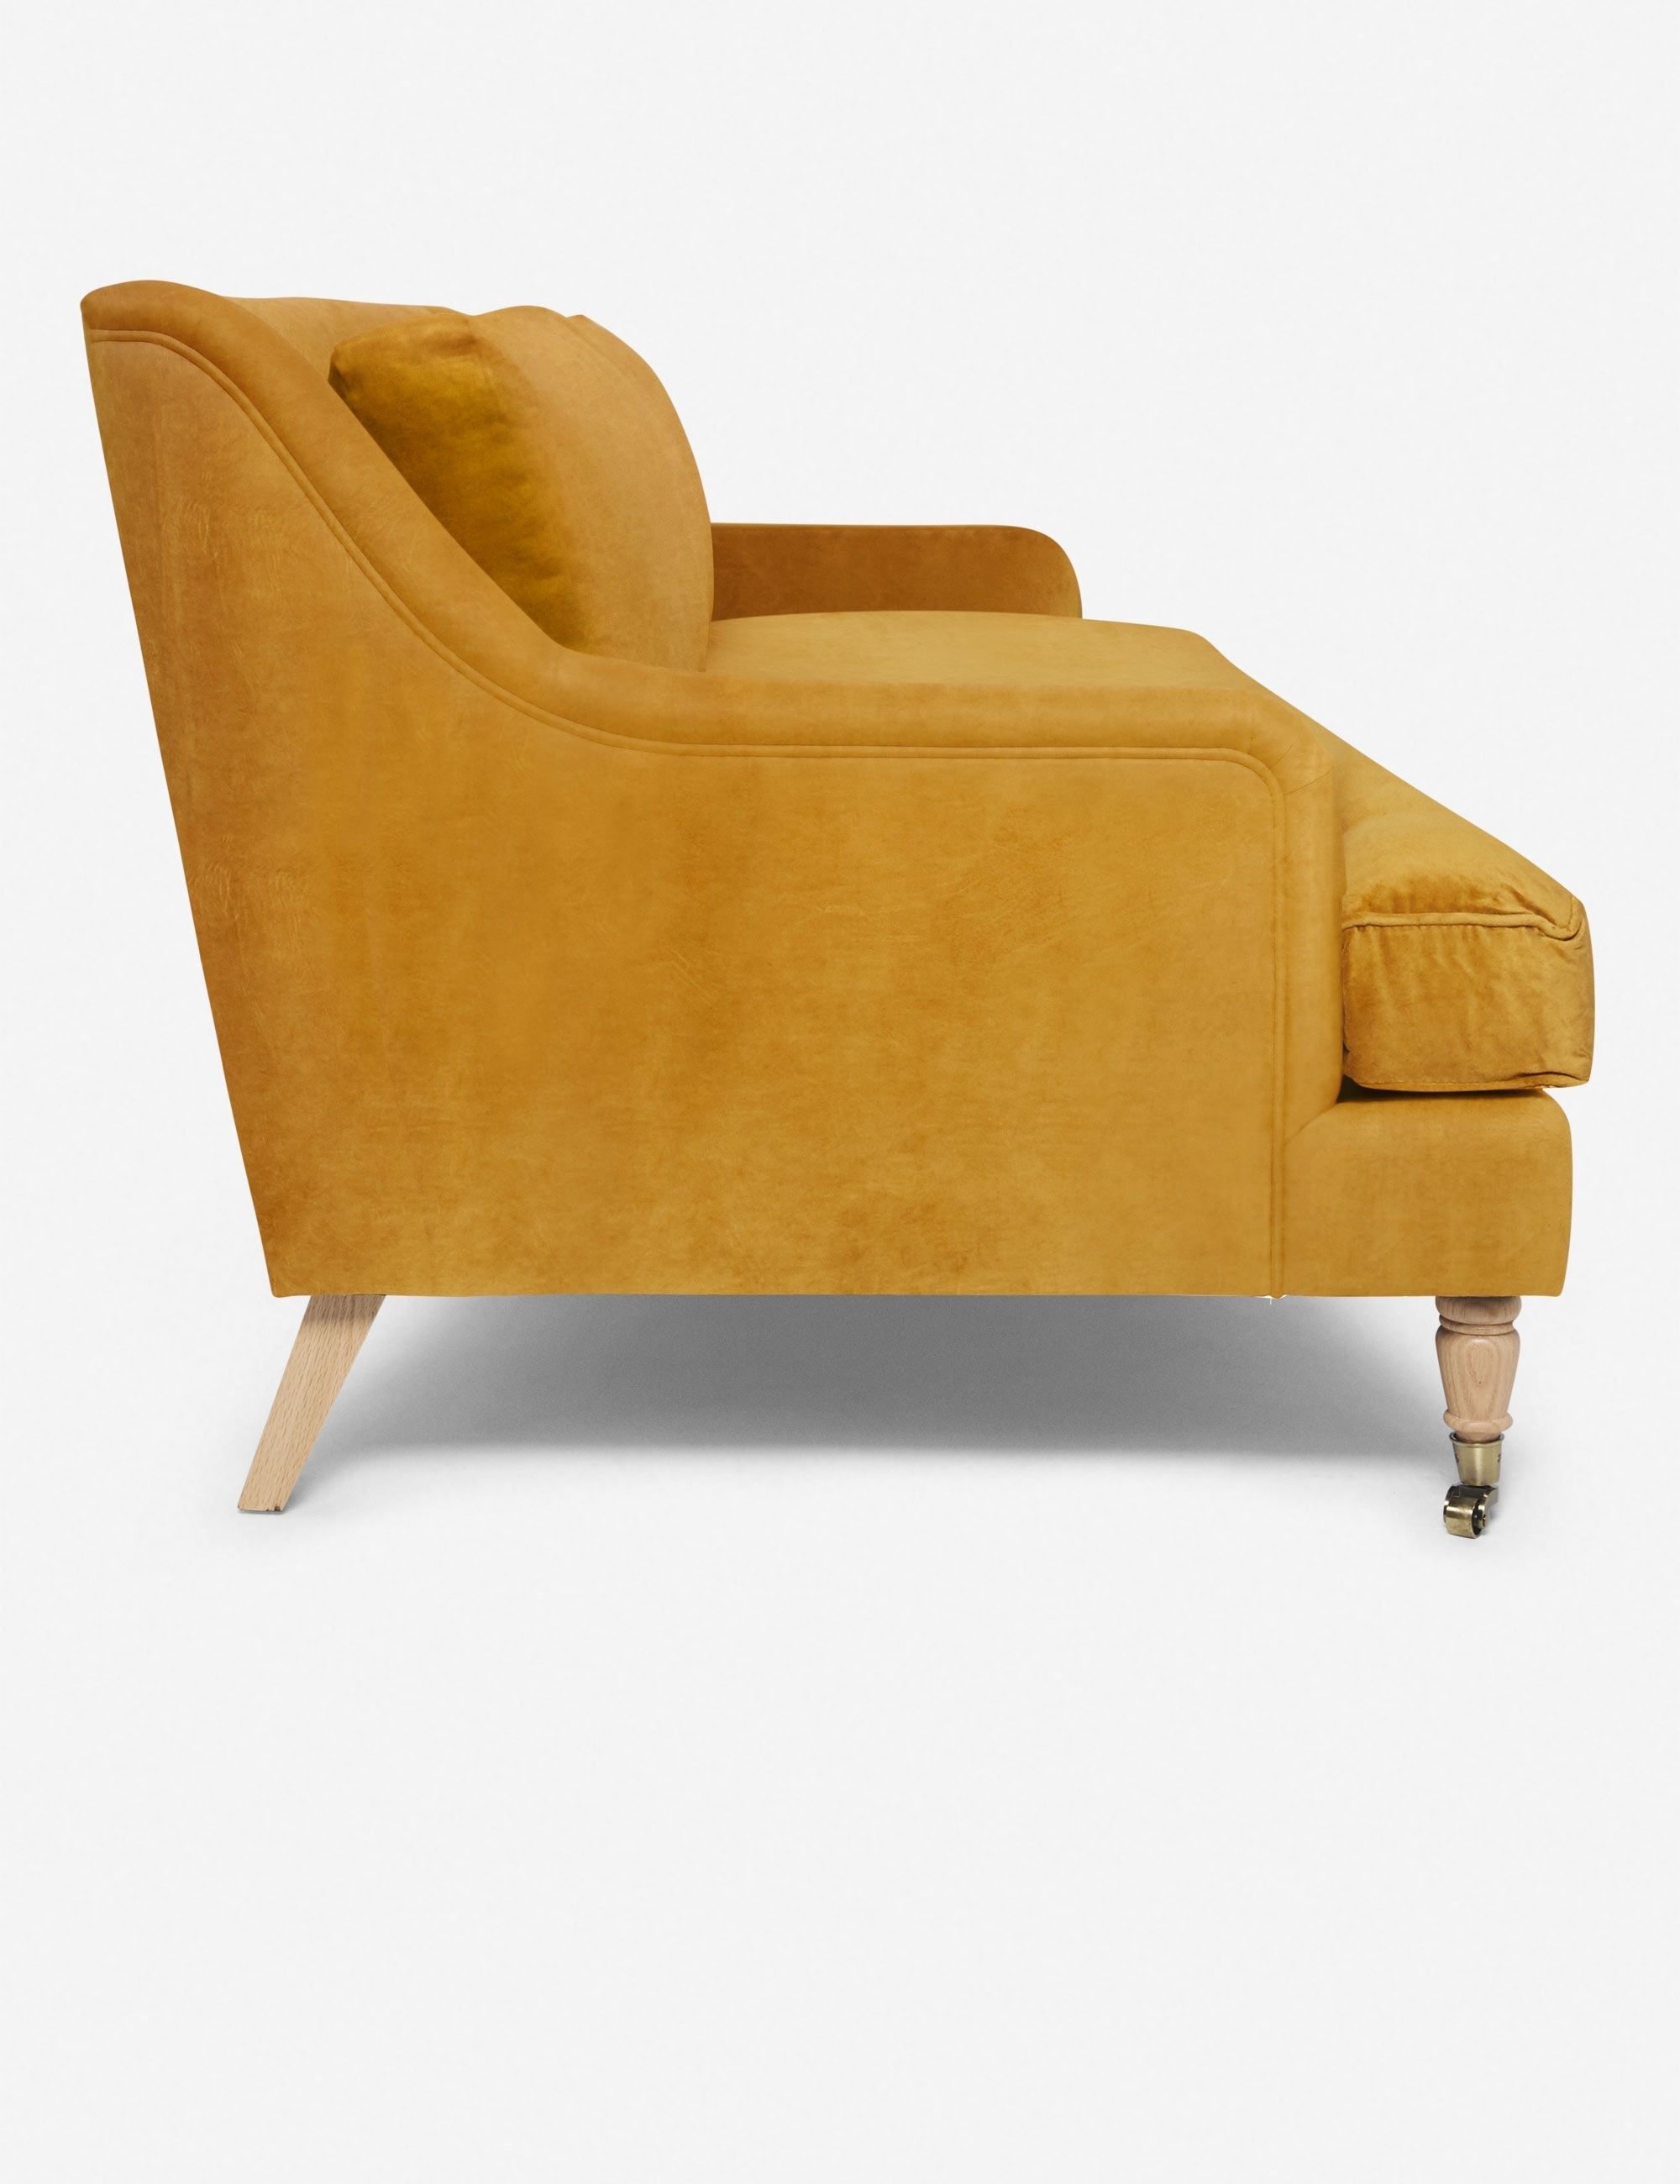 Rivington Sofa by Ginny Macdonald - Image 2